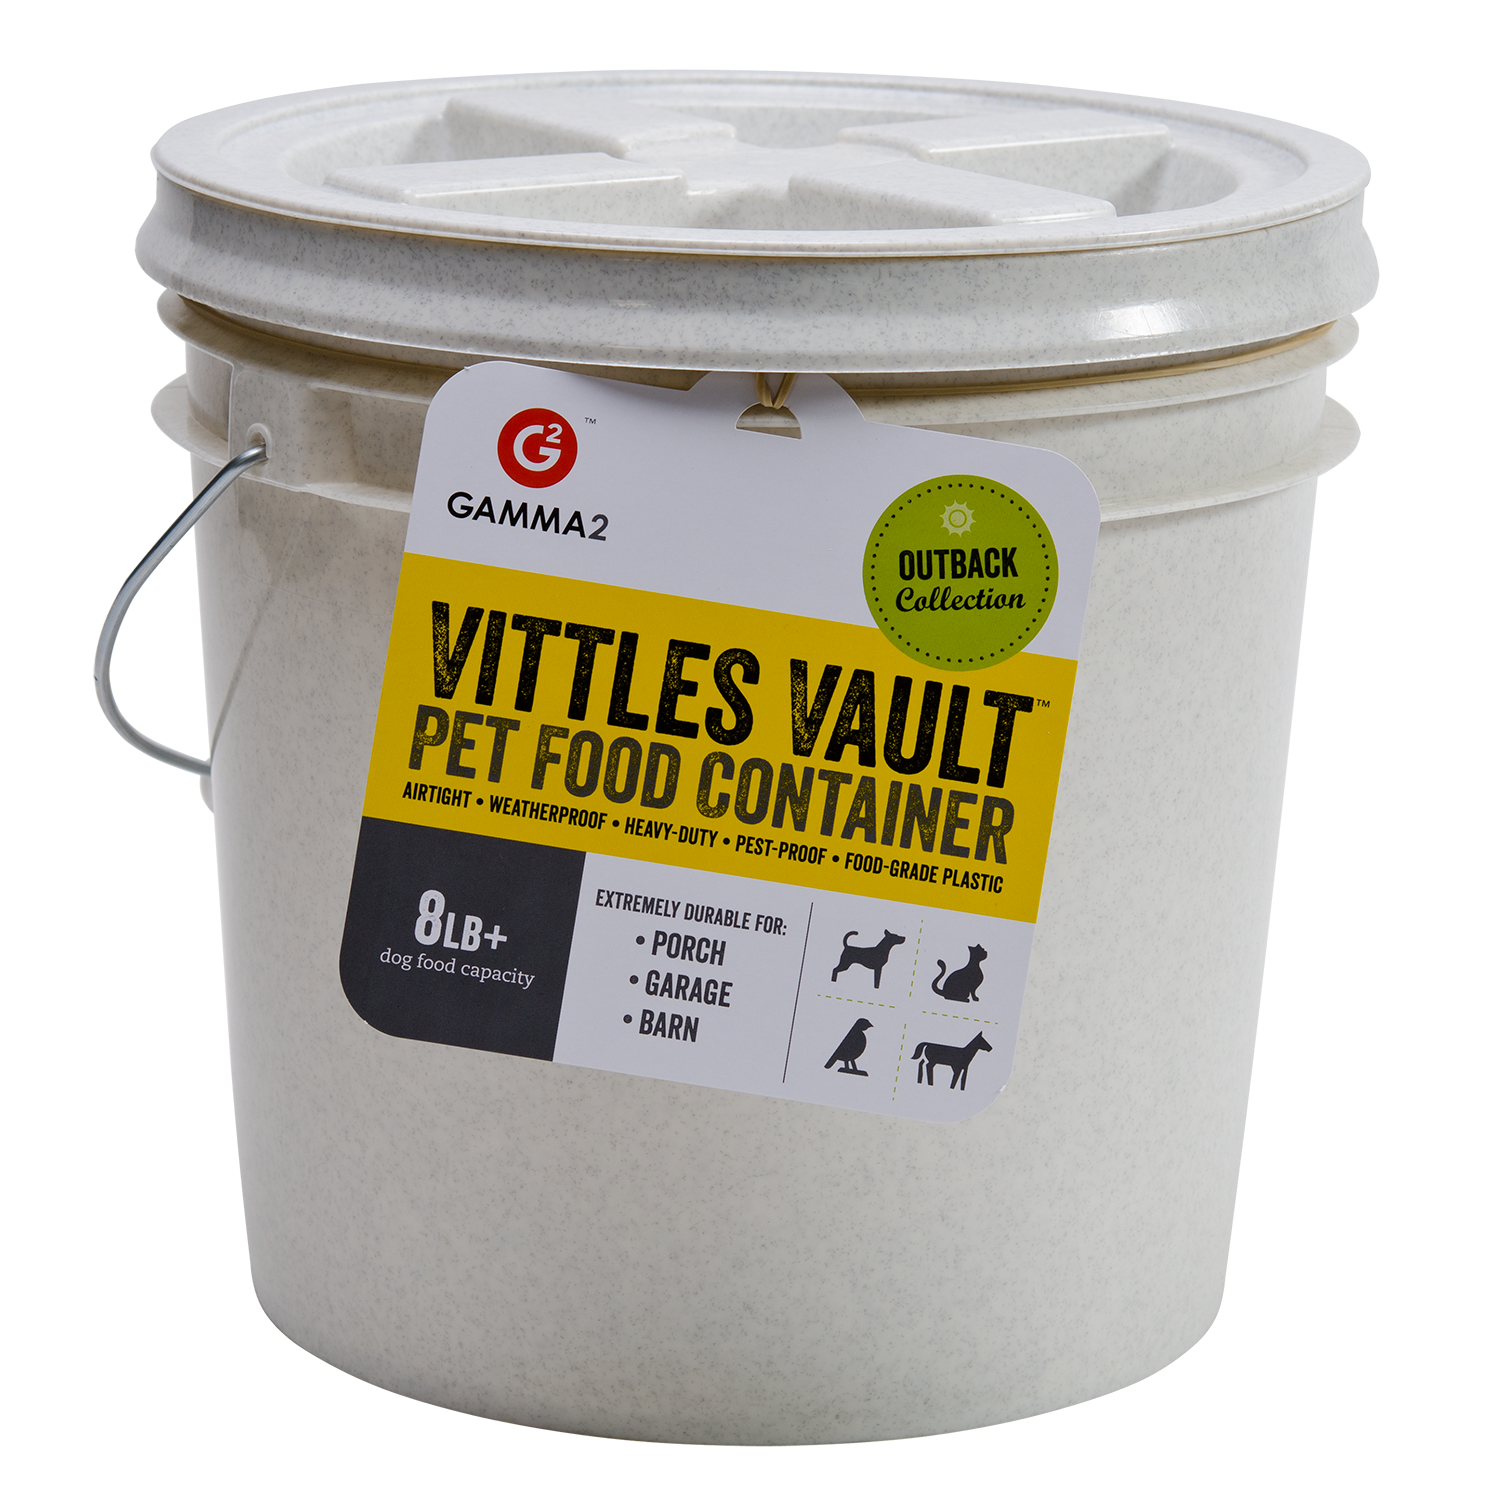 Gamma2 Vittles Vault Pet Food Container, 25 lb+